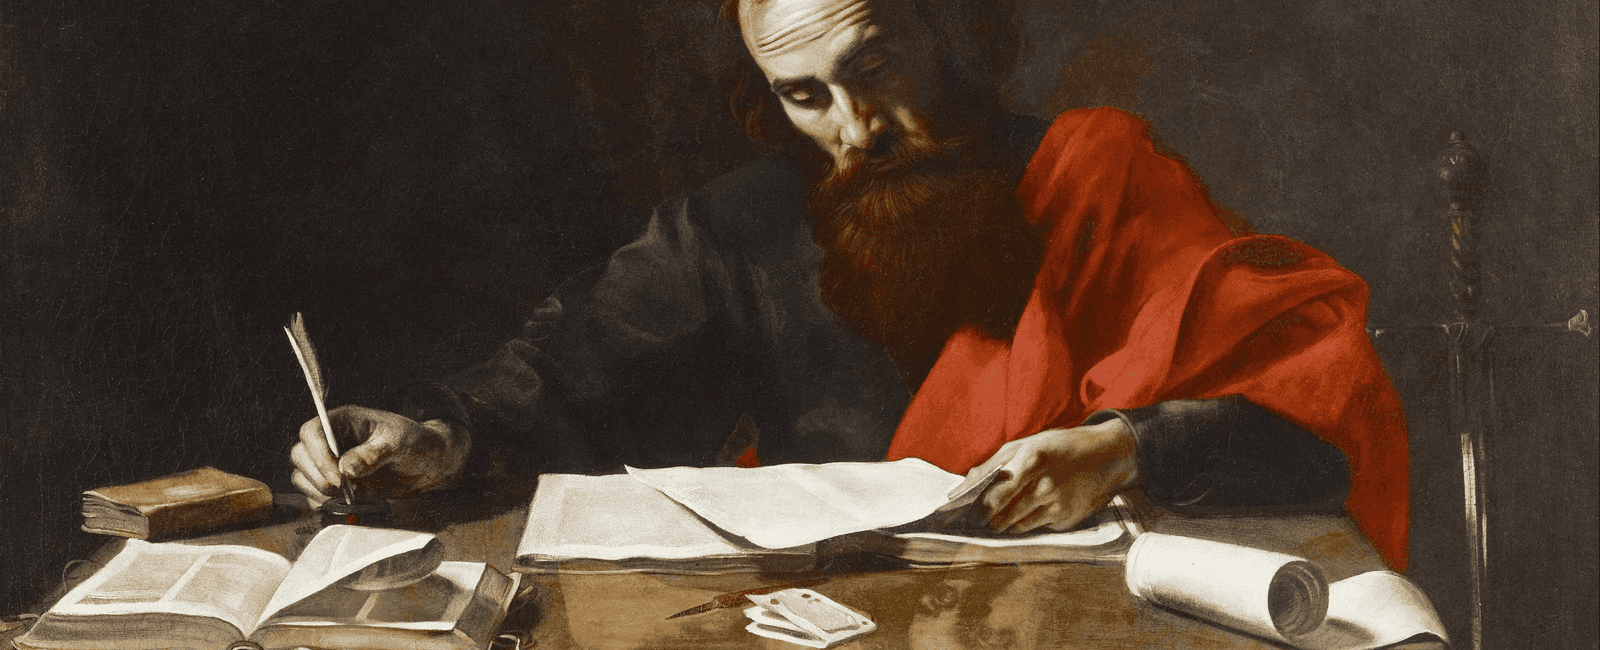 A Conversation with Grant Kaplan on “Faith and Reason through Christian History: A Theological Essay"